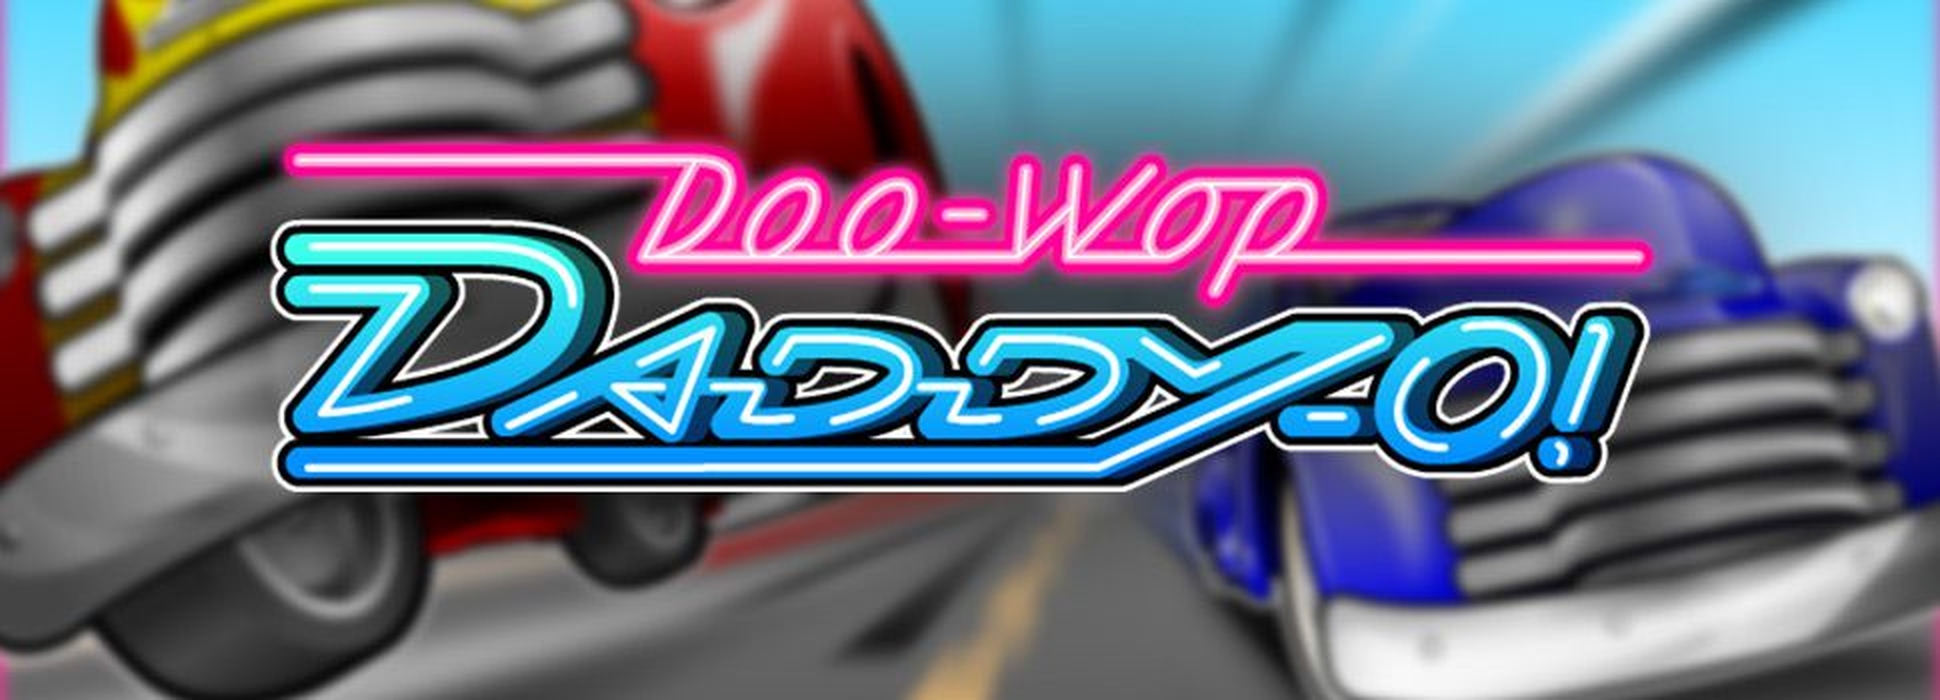 Doo Wop Daddy-O demo